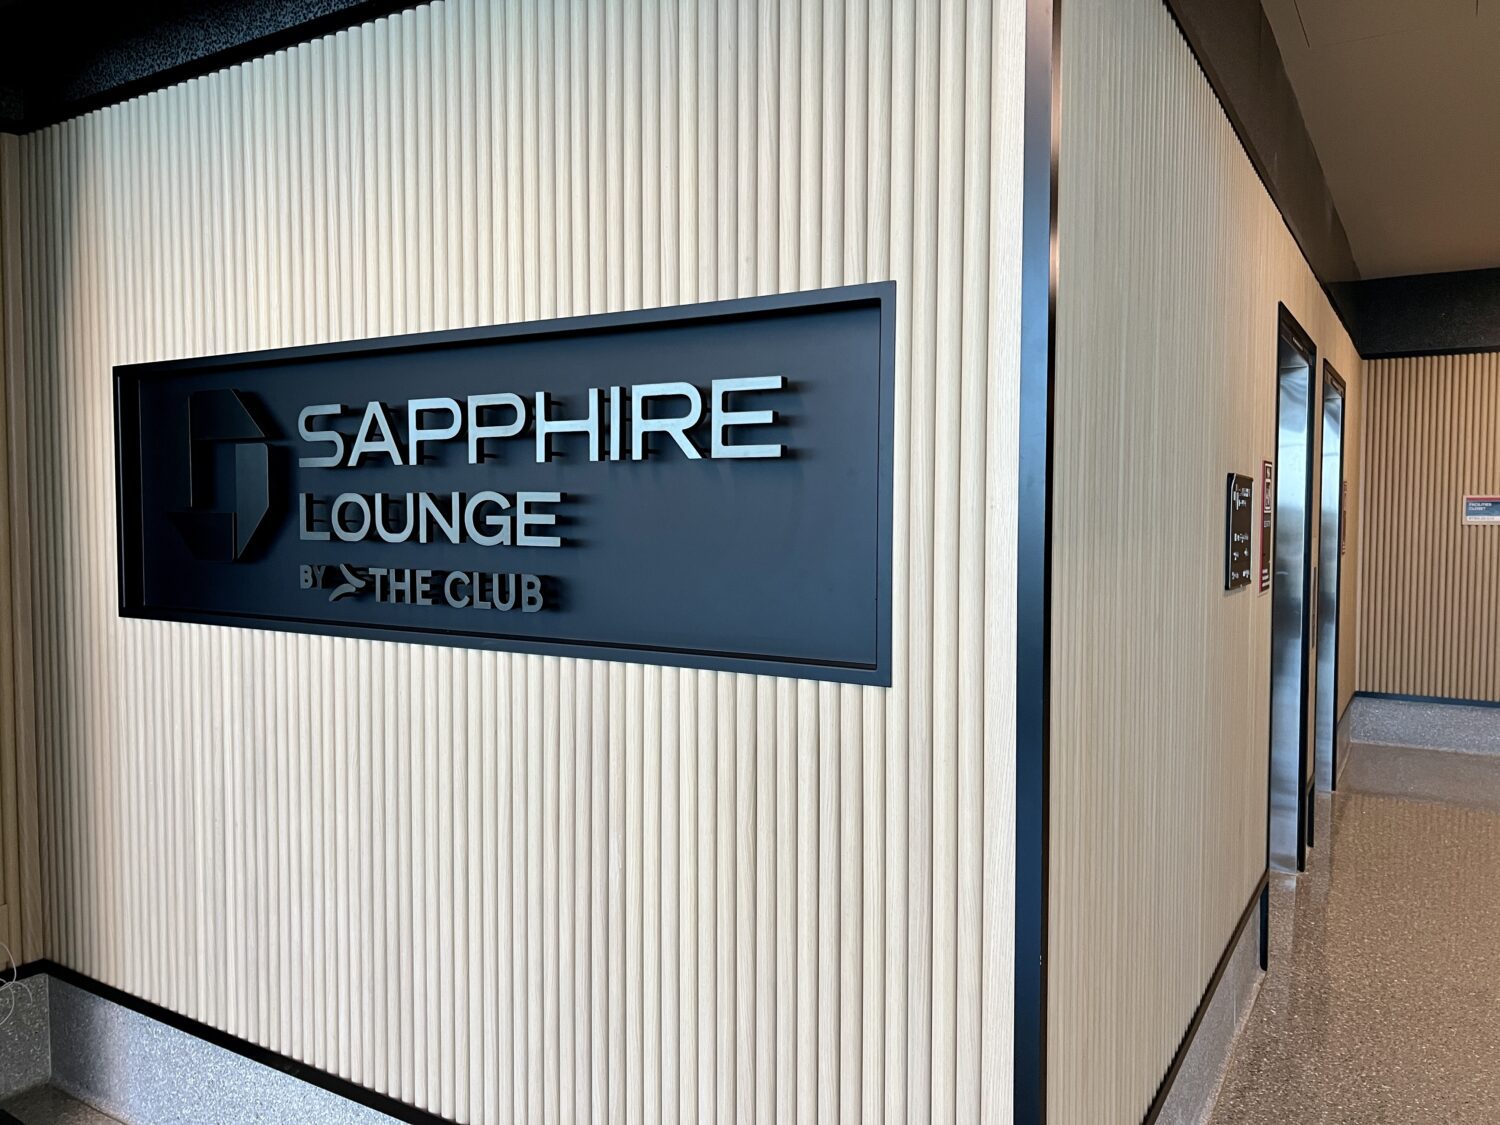 chase sapphire lounge boston elevators